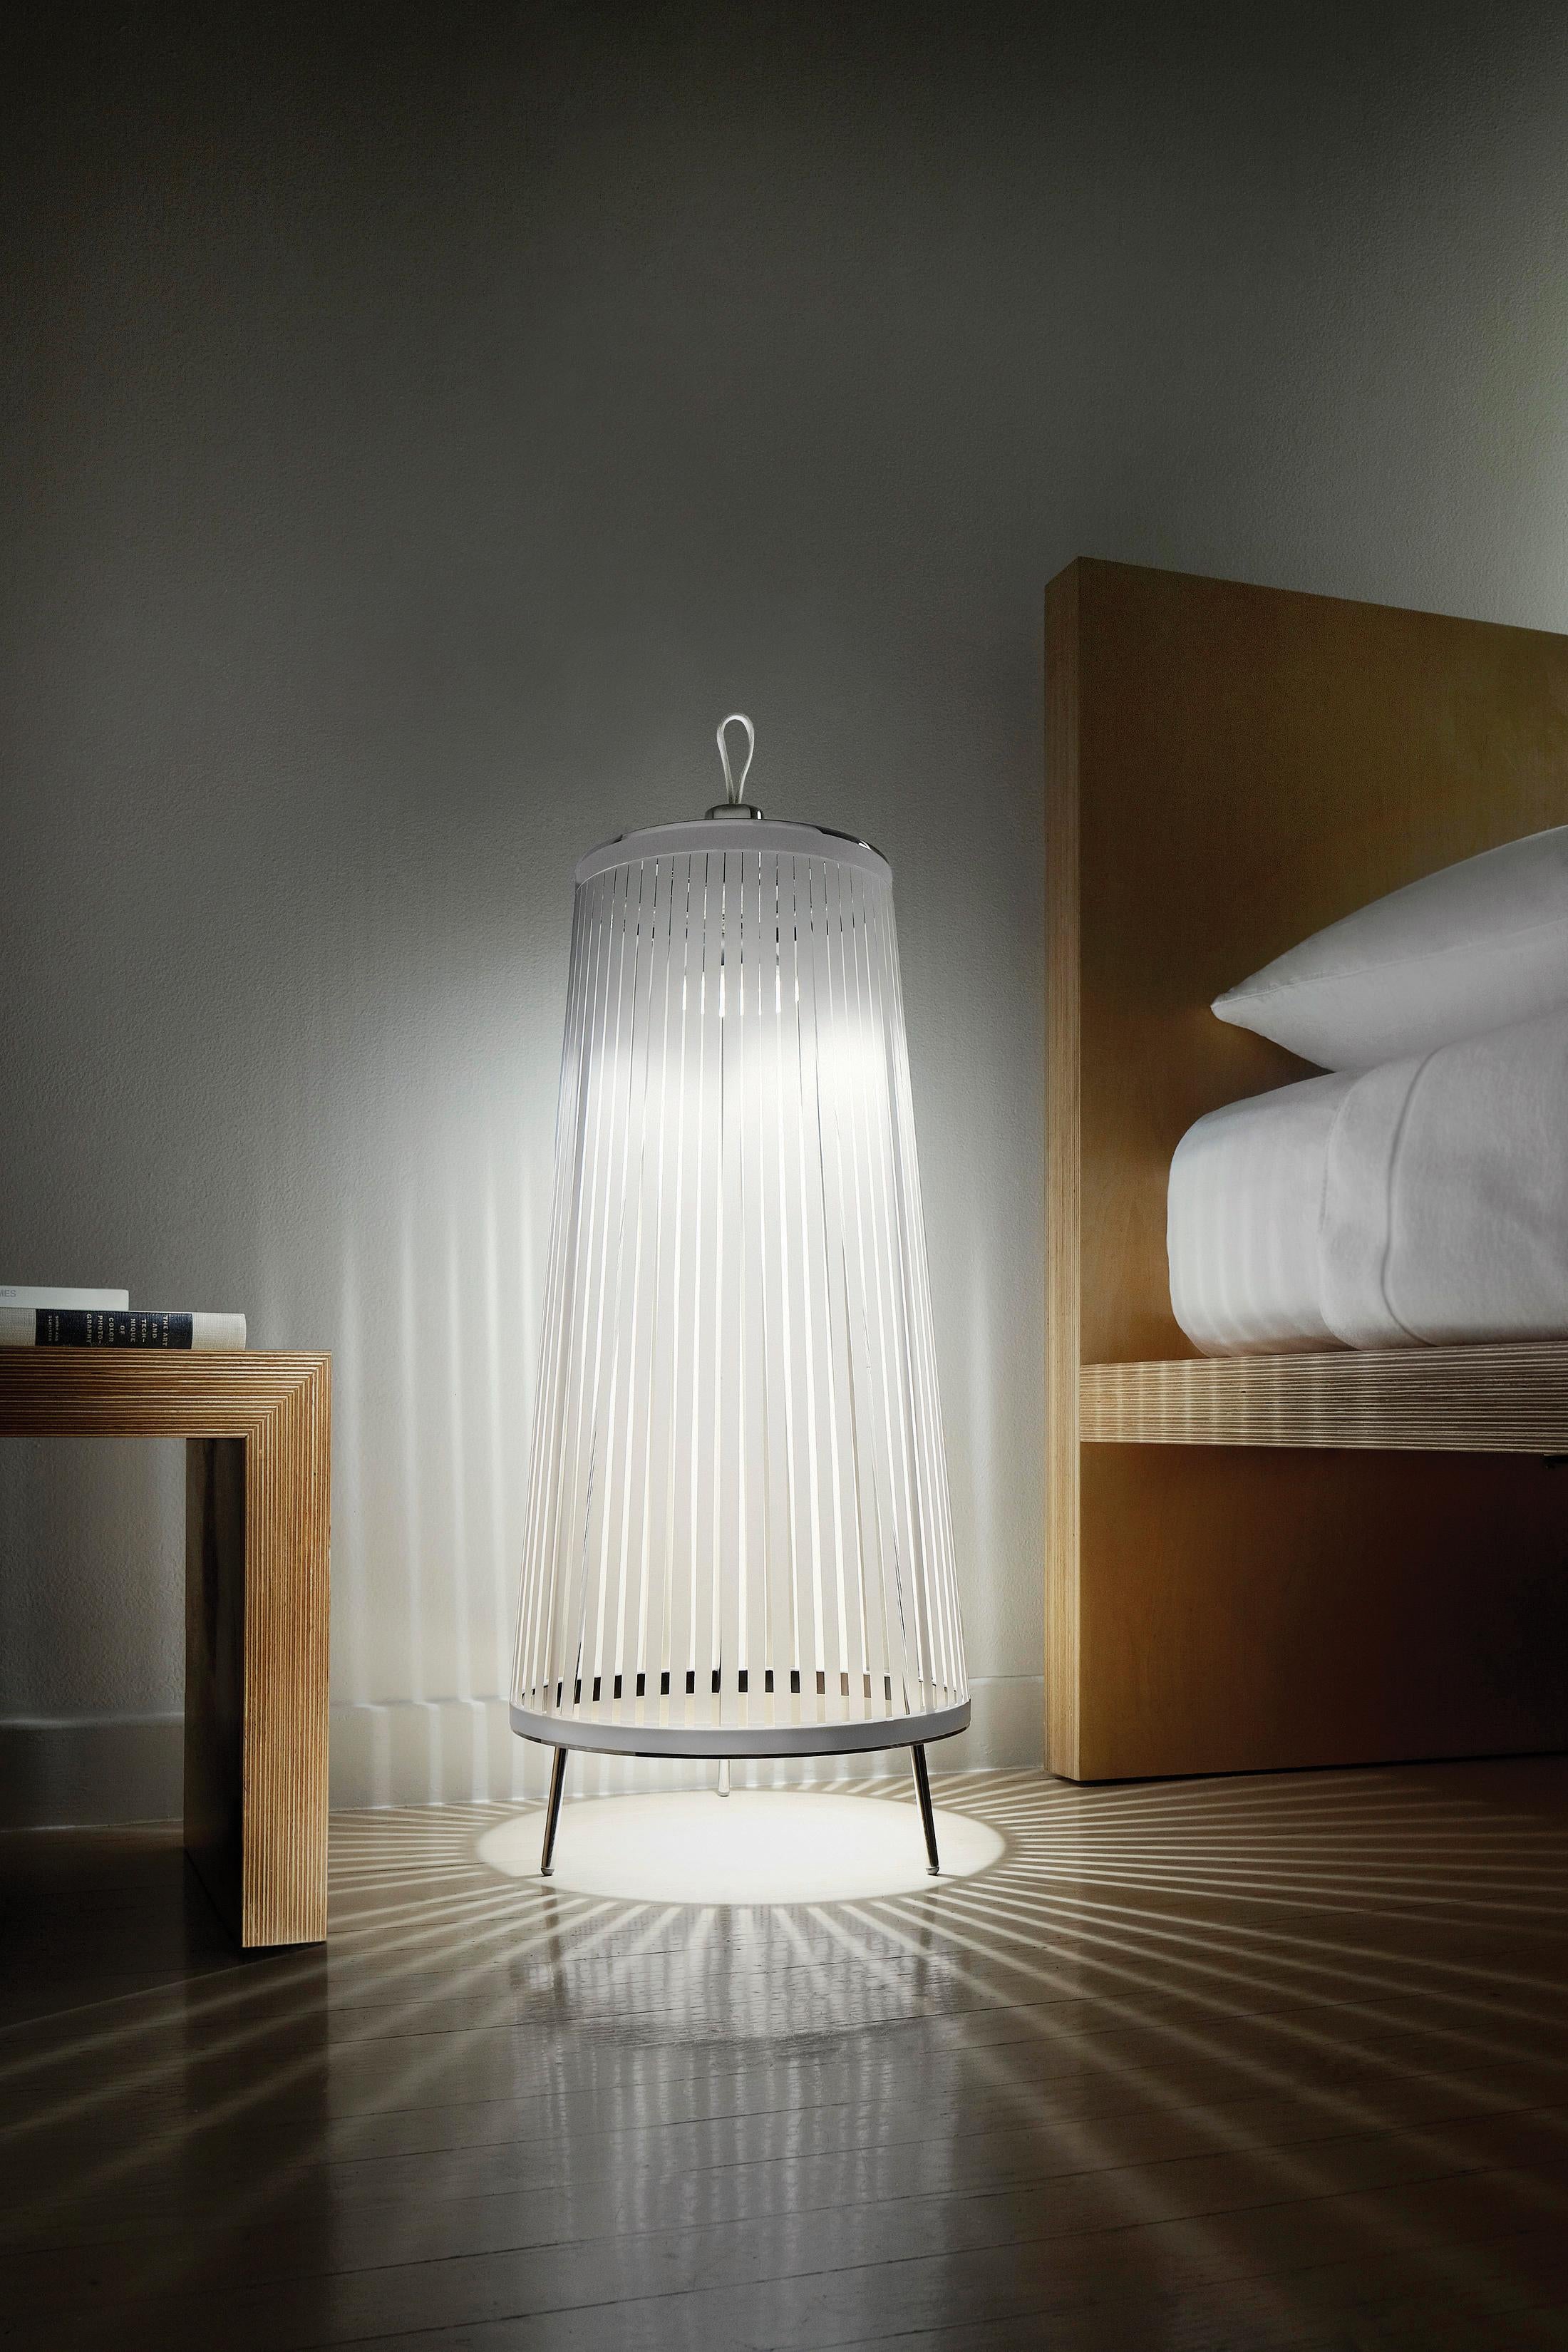 Solis 48 Freestanding Lamp in Brown by Pablo Designs (amerikanisch)